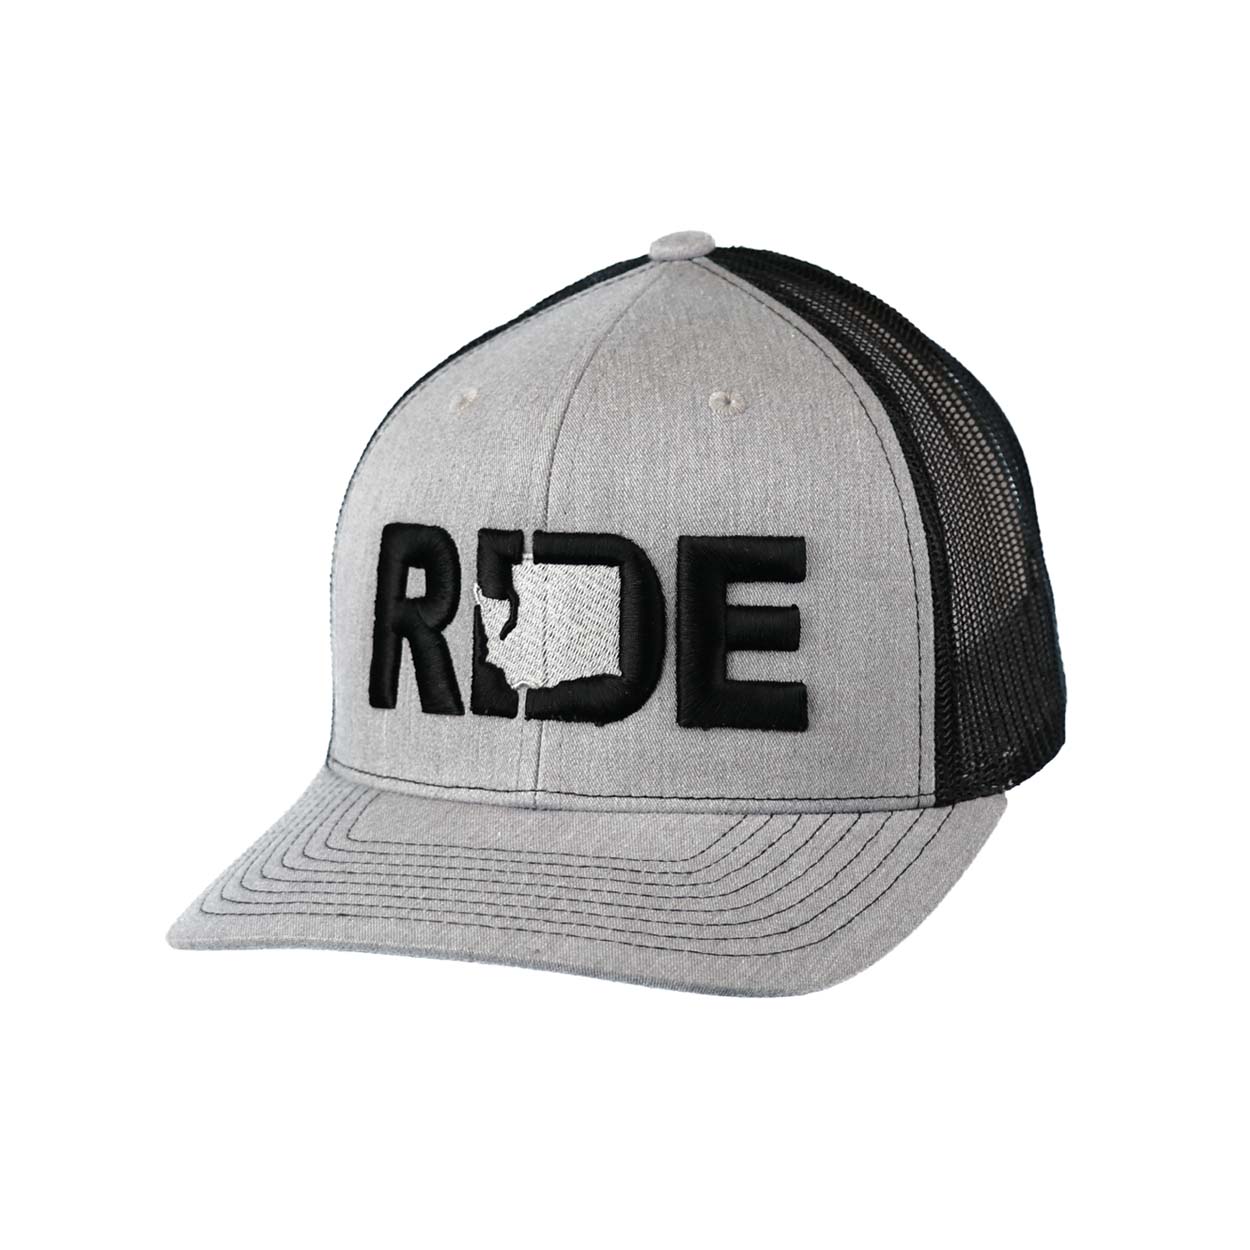 Ride Washington Classic Pro 3D Puff Embroidered Snapback Trucker Hat Heather Gray/Black